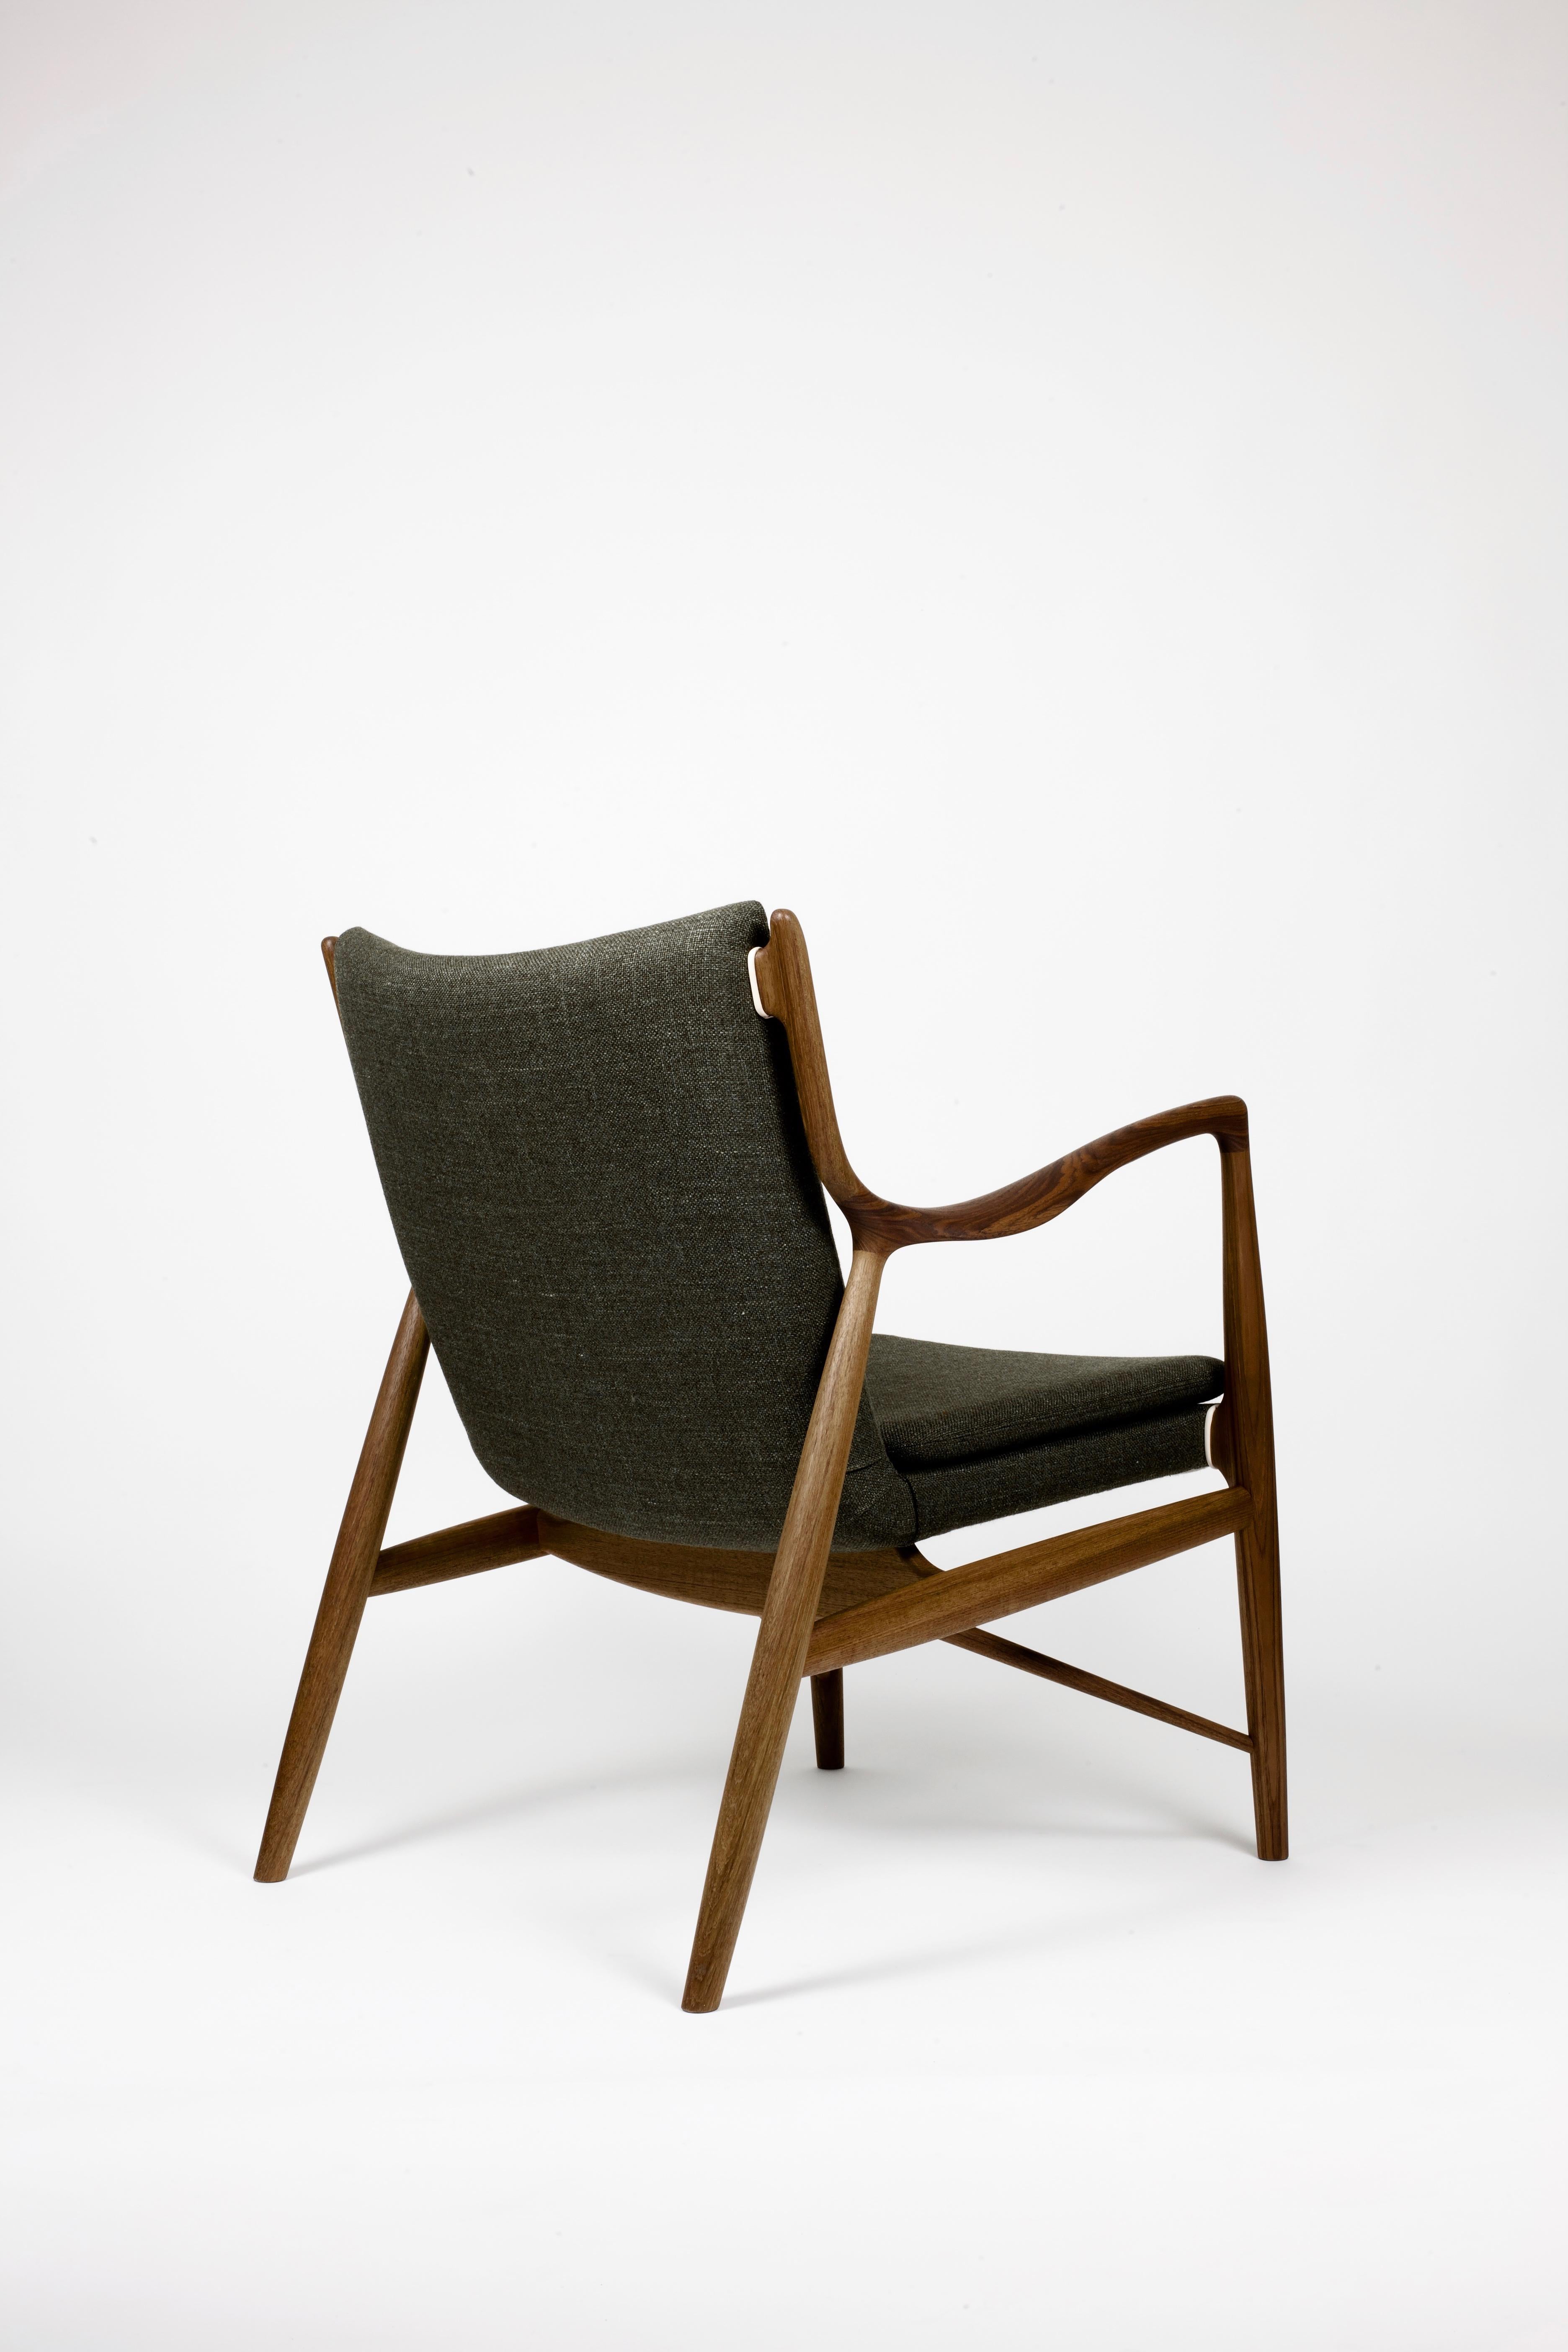 Danish Finn Juhl 45 Chair, Wood and Fabric